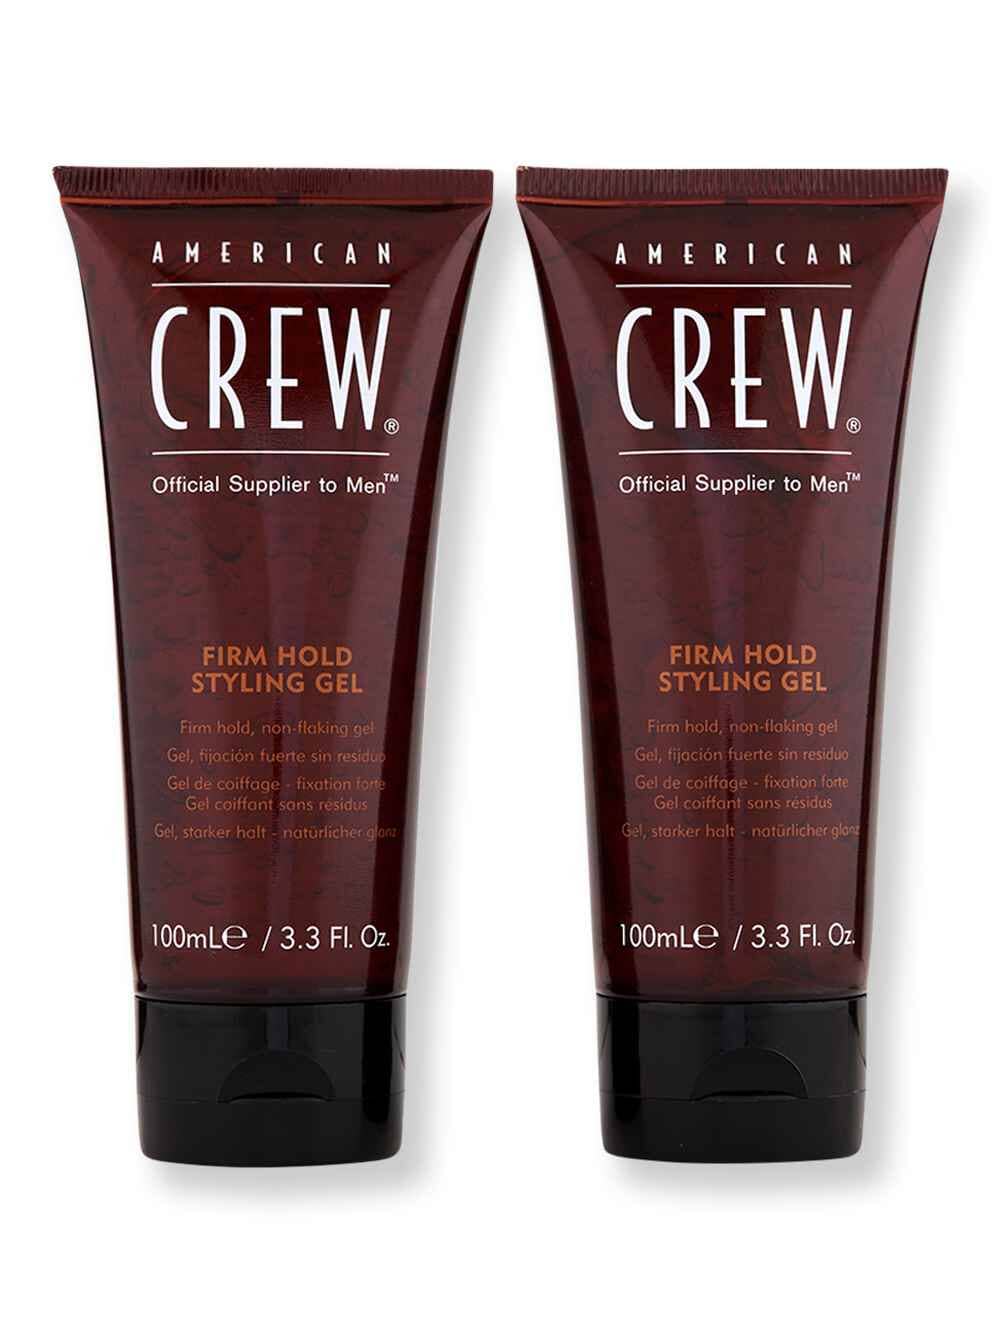 American Crew American Crew Firm Hold Styling Gel 2 Ct 3.3 oz Hair Gels 